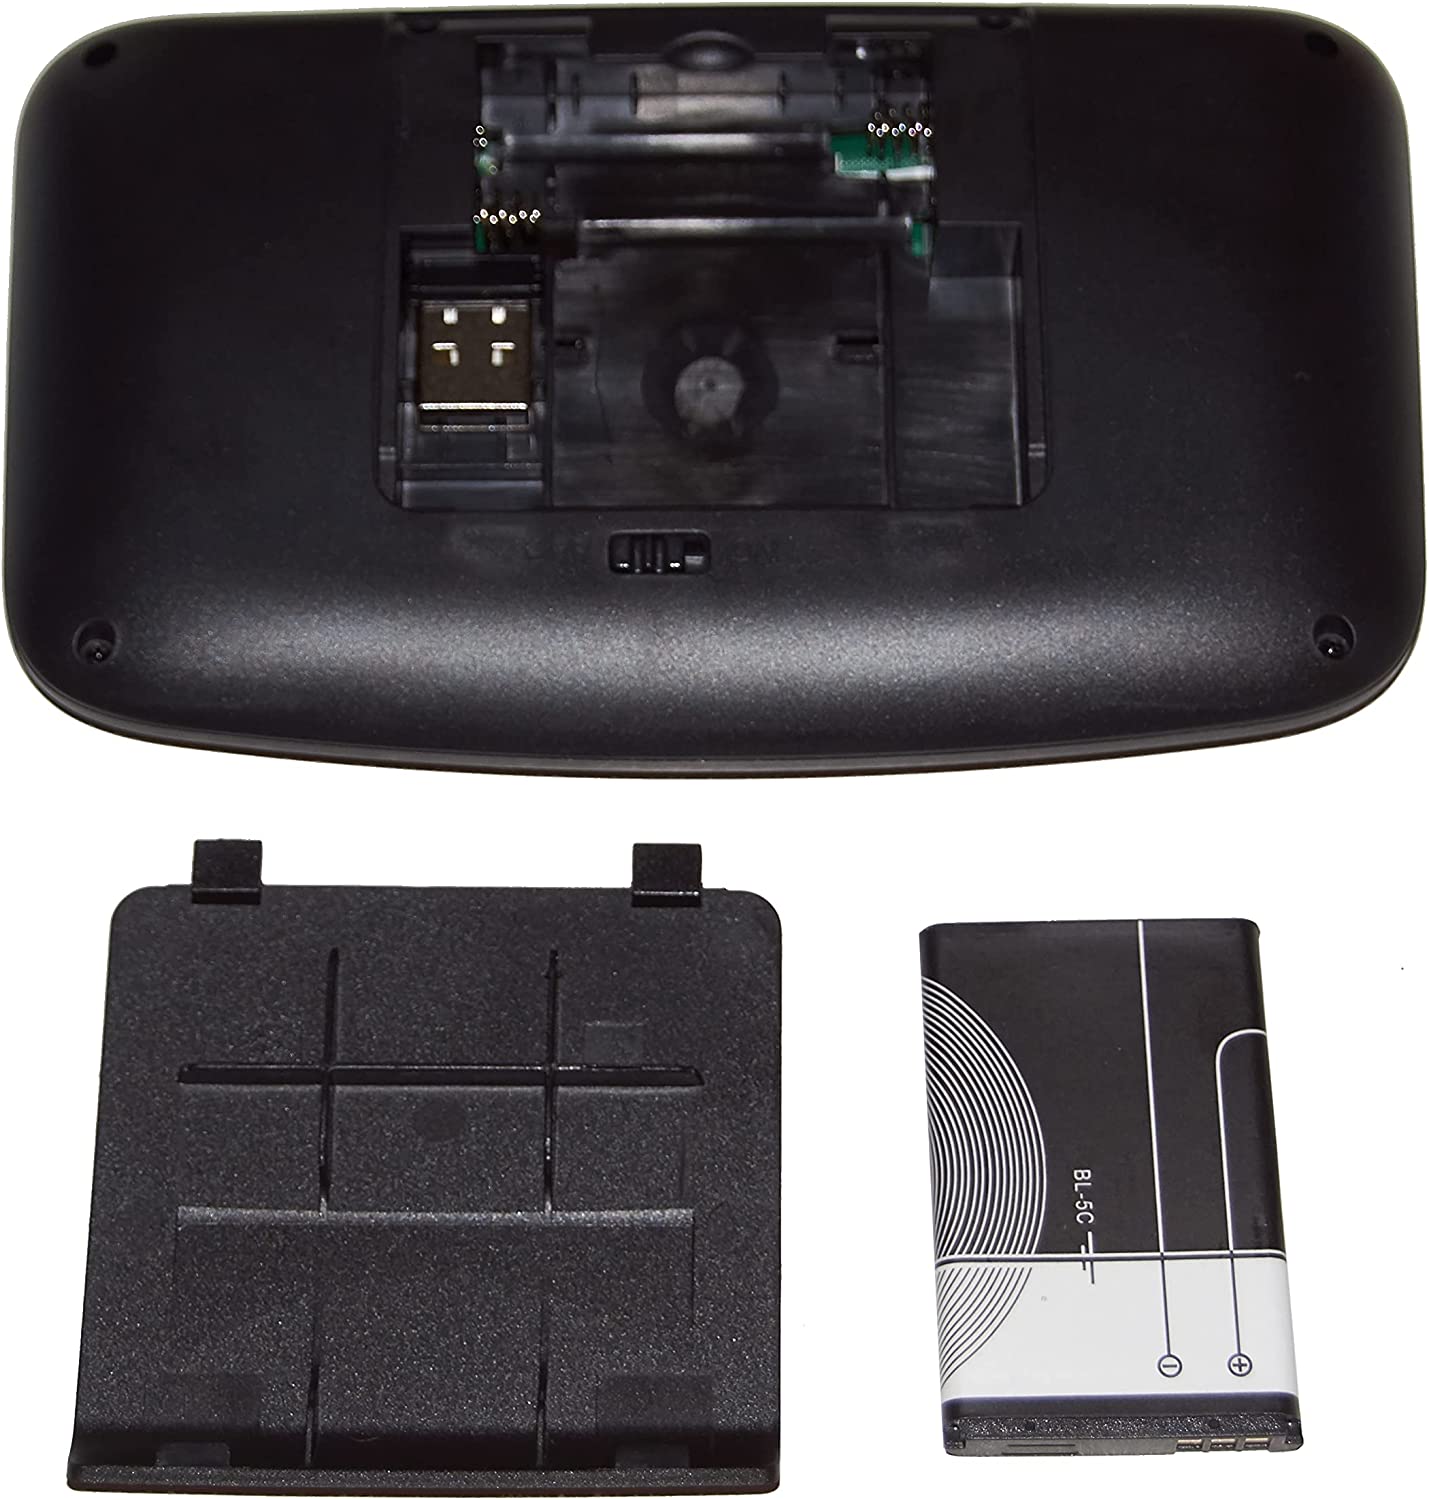 Mini teclado inalámbrico con touchpad - Paquete de 10 unidades